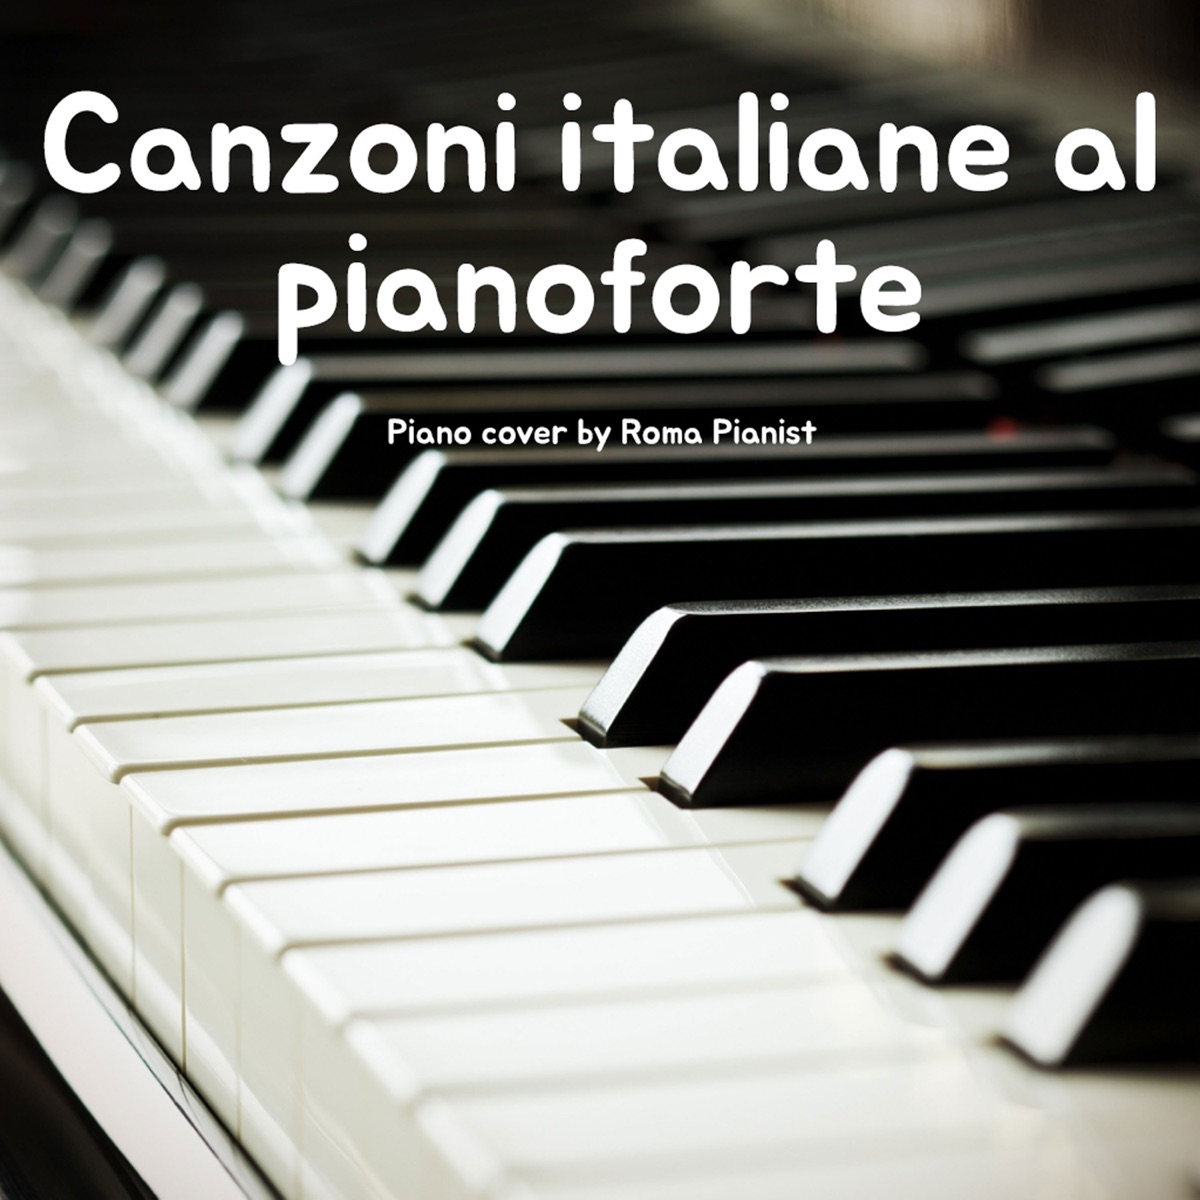 Canzoni italiane al pianoforte IV by Roma Pianist on Apple Music